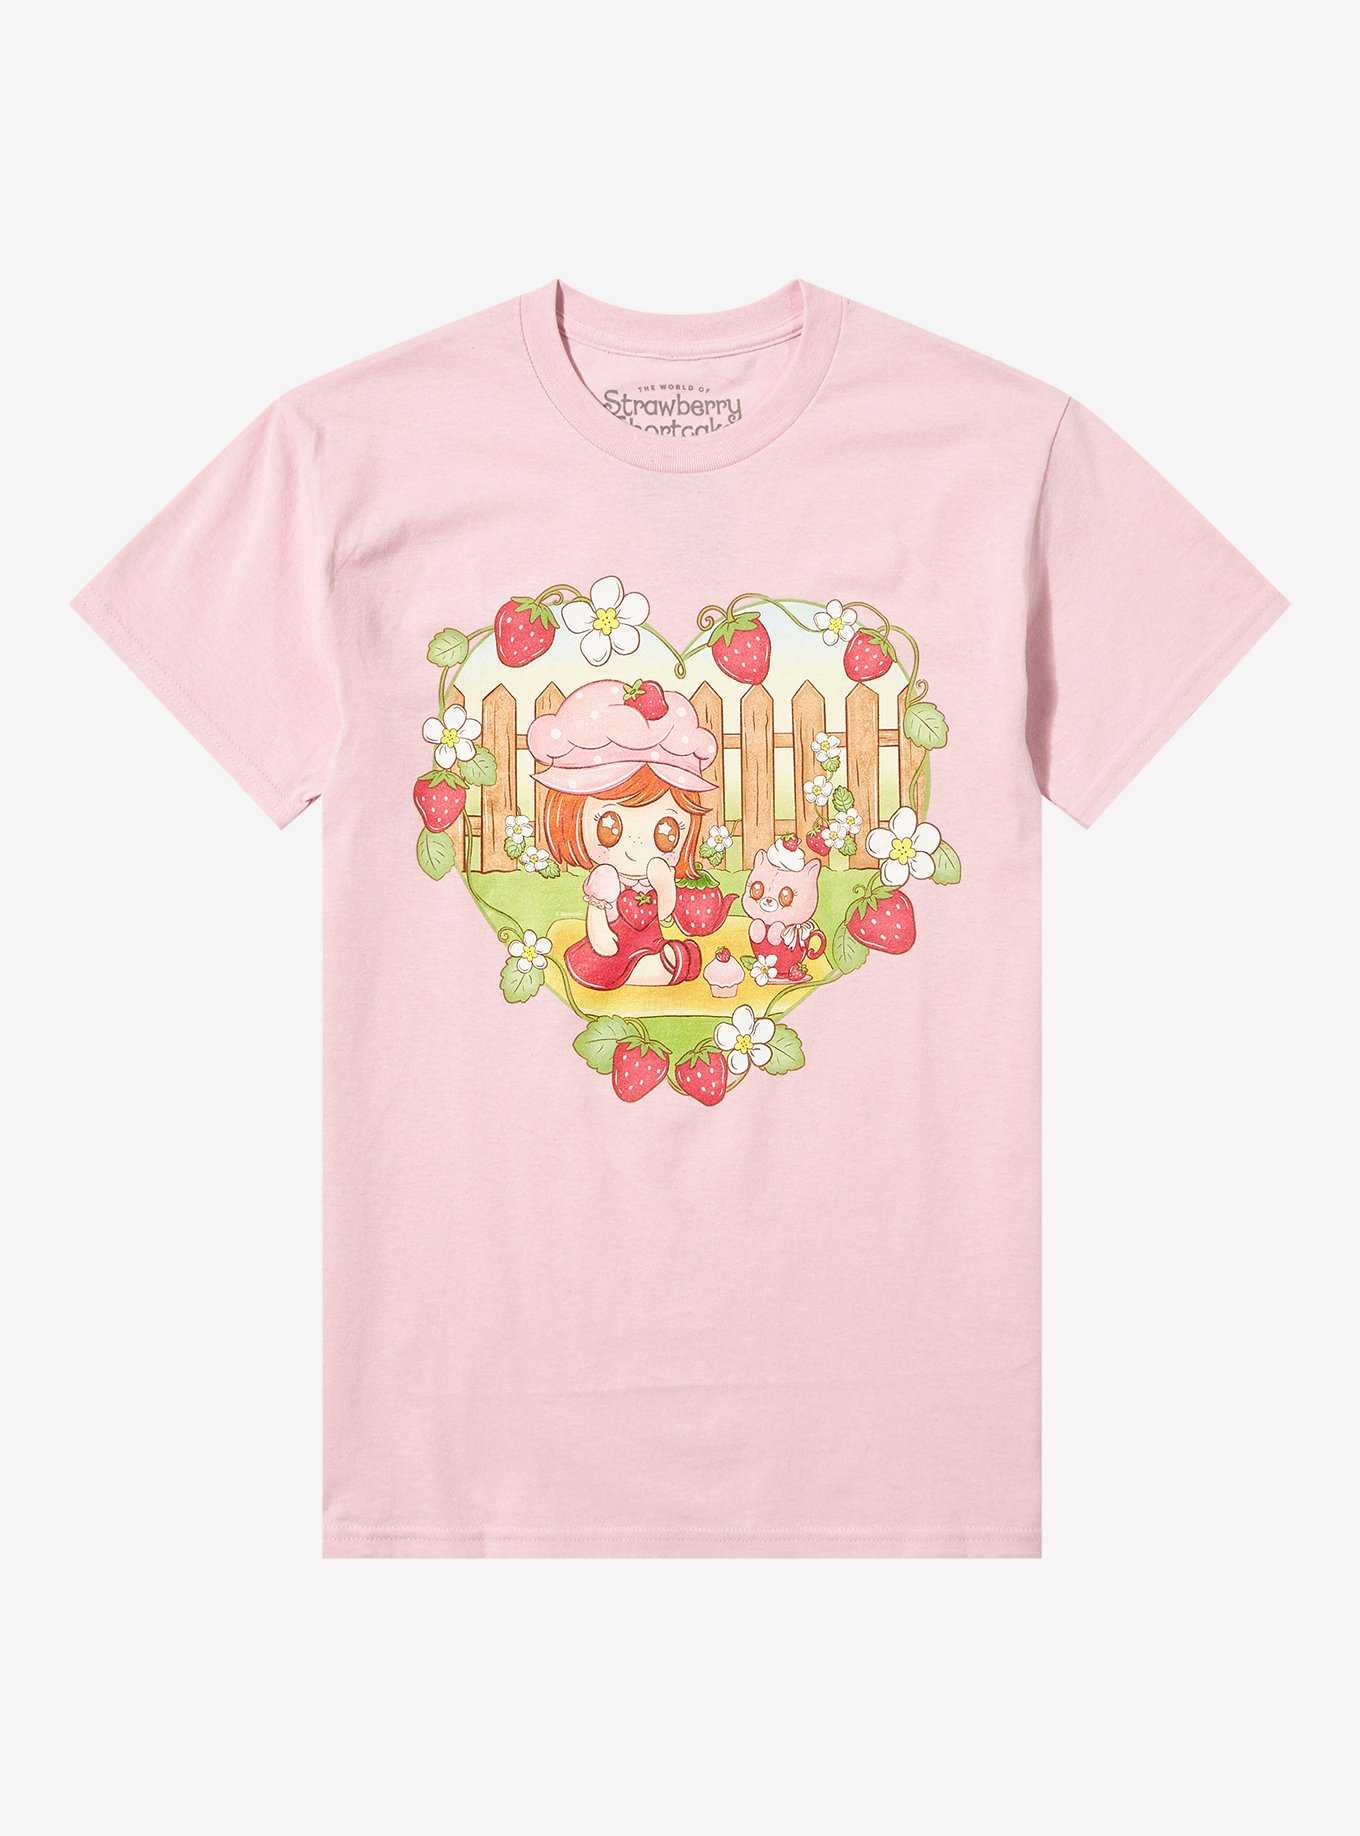 Strawberry Shortcake X Spooksieboo Heart Boyfriend Fit Girls T-Shirt, , hi-res